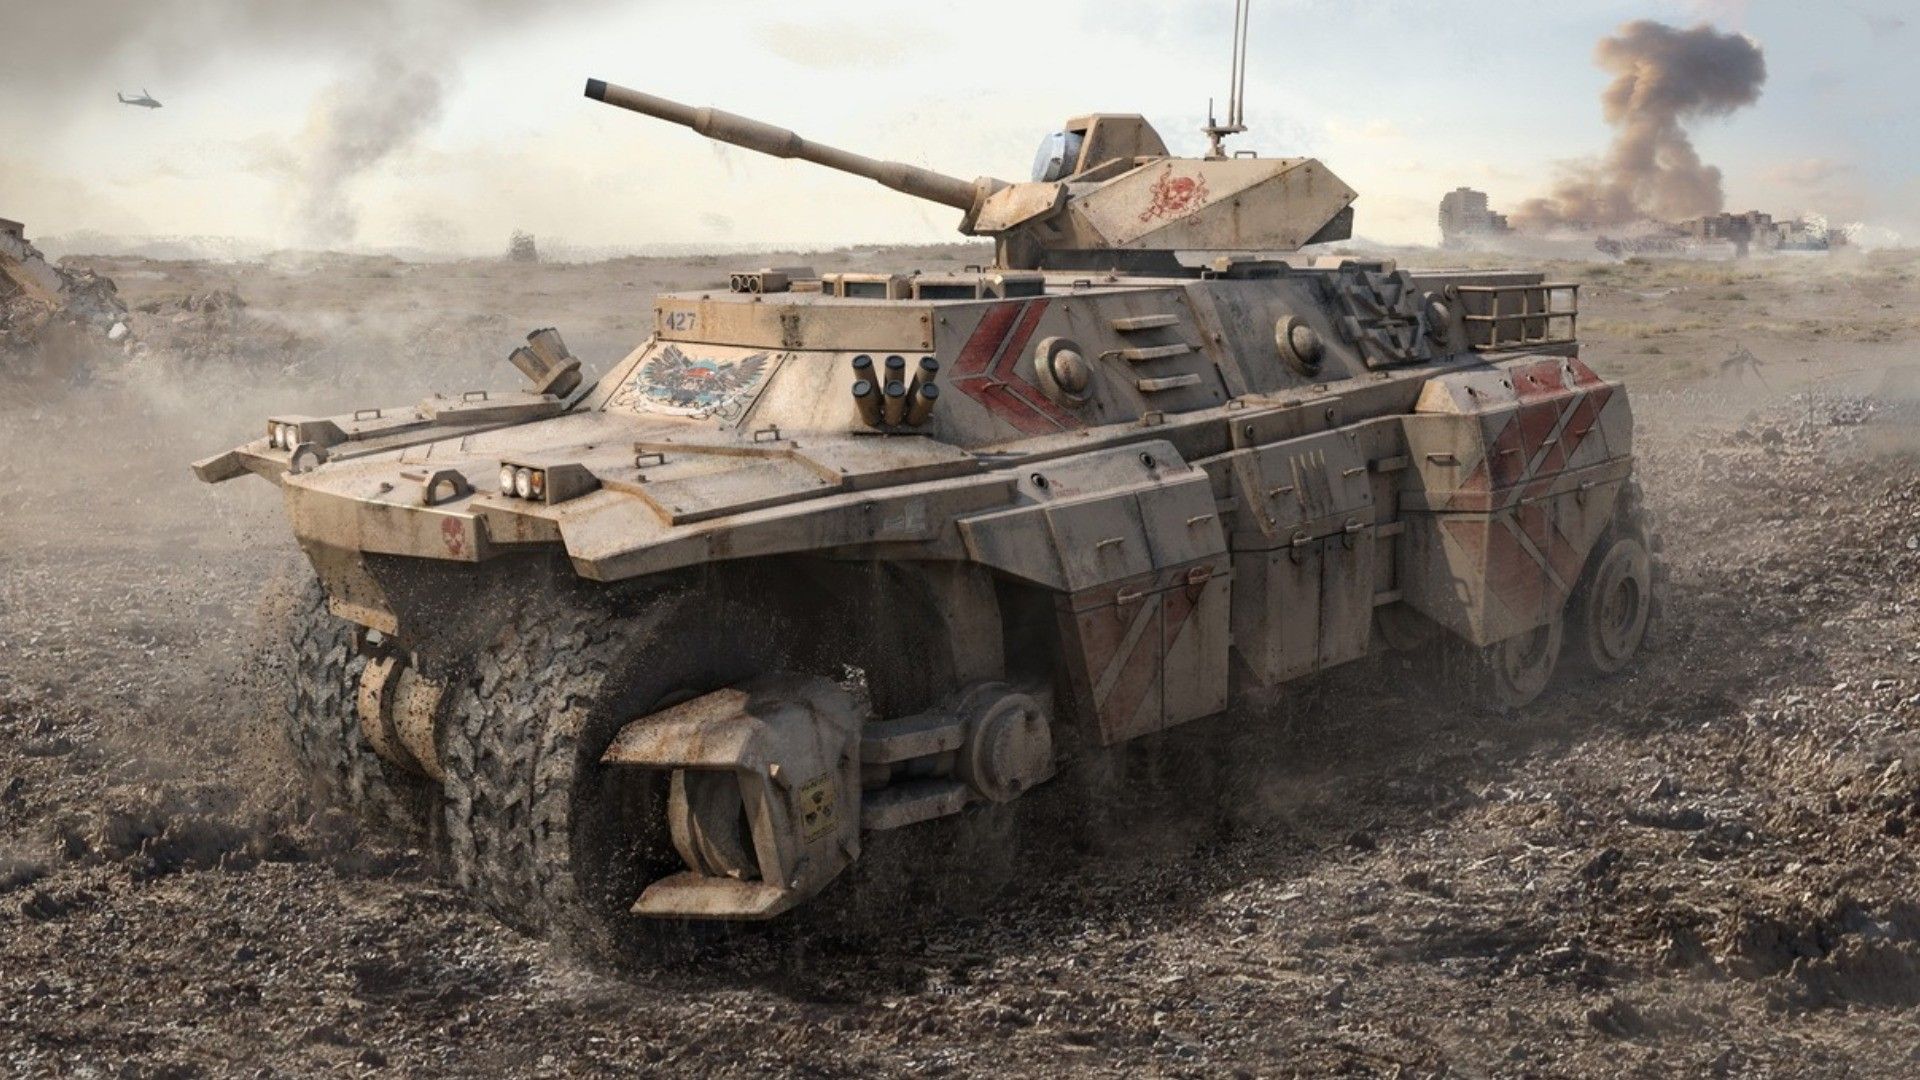 Sci Fi Hover Tank. Military Futuristic Desert Tanks Science Fiction Artwork Assault. Tanks Military, Military Vehicles, Military